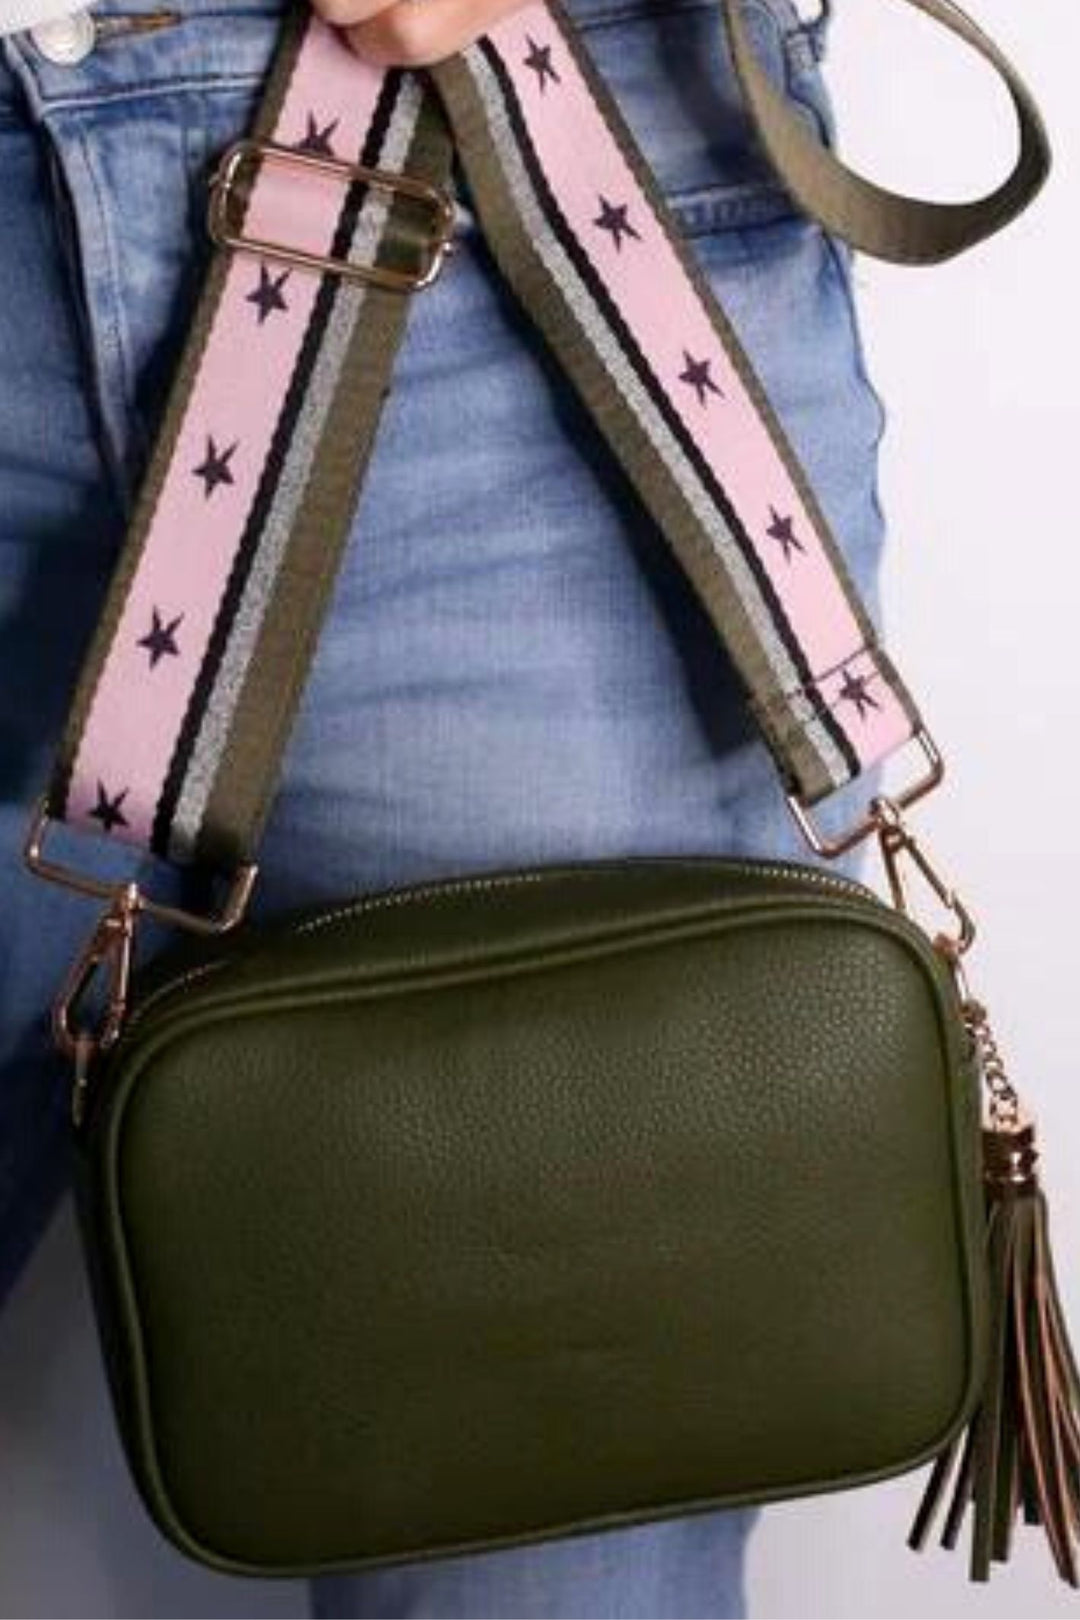 Star & Stripe Bag Strap Pink Khaki - Sugarplum Boutique